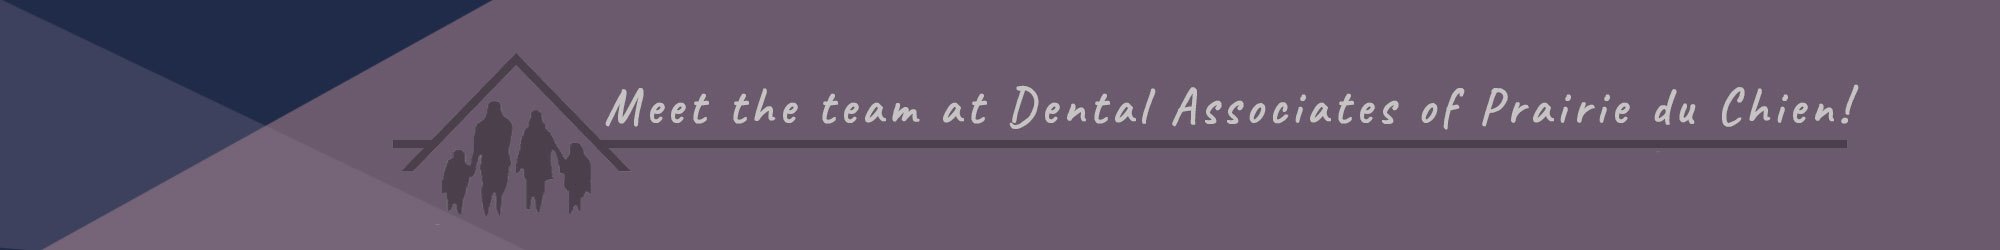 About Dental Associates of Prairie du Chien